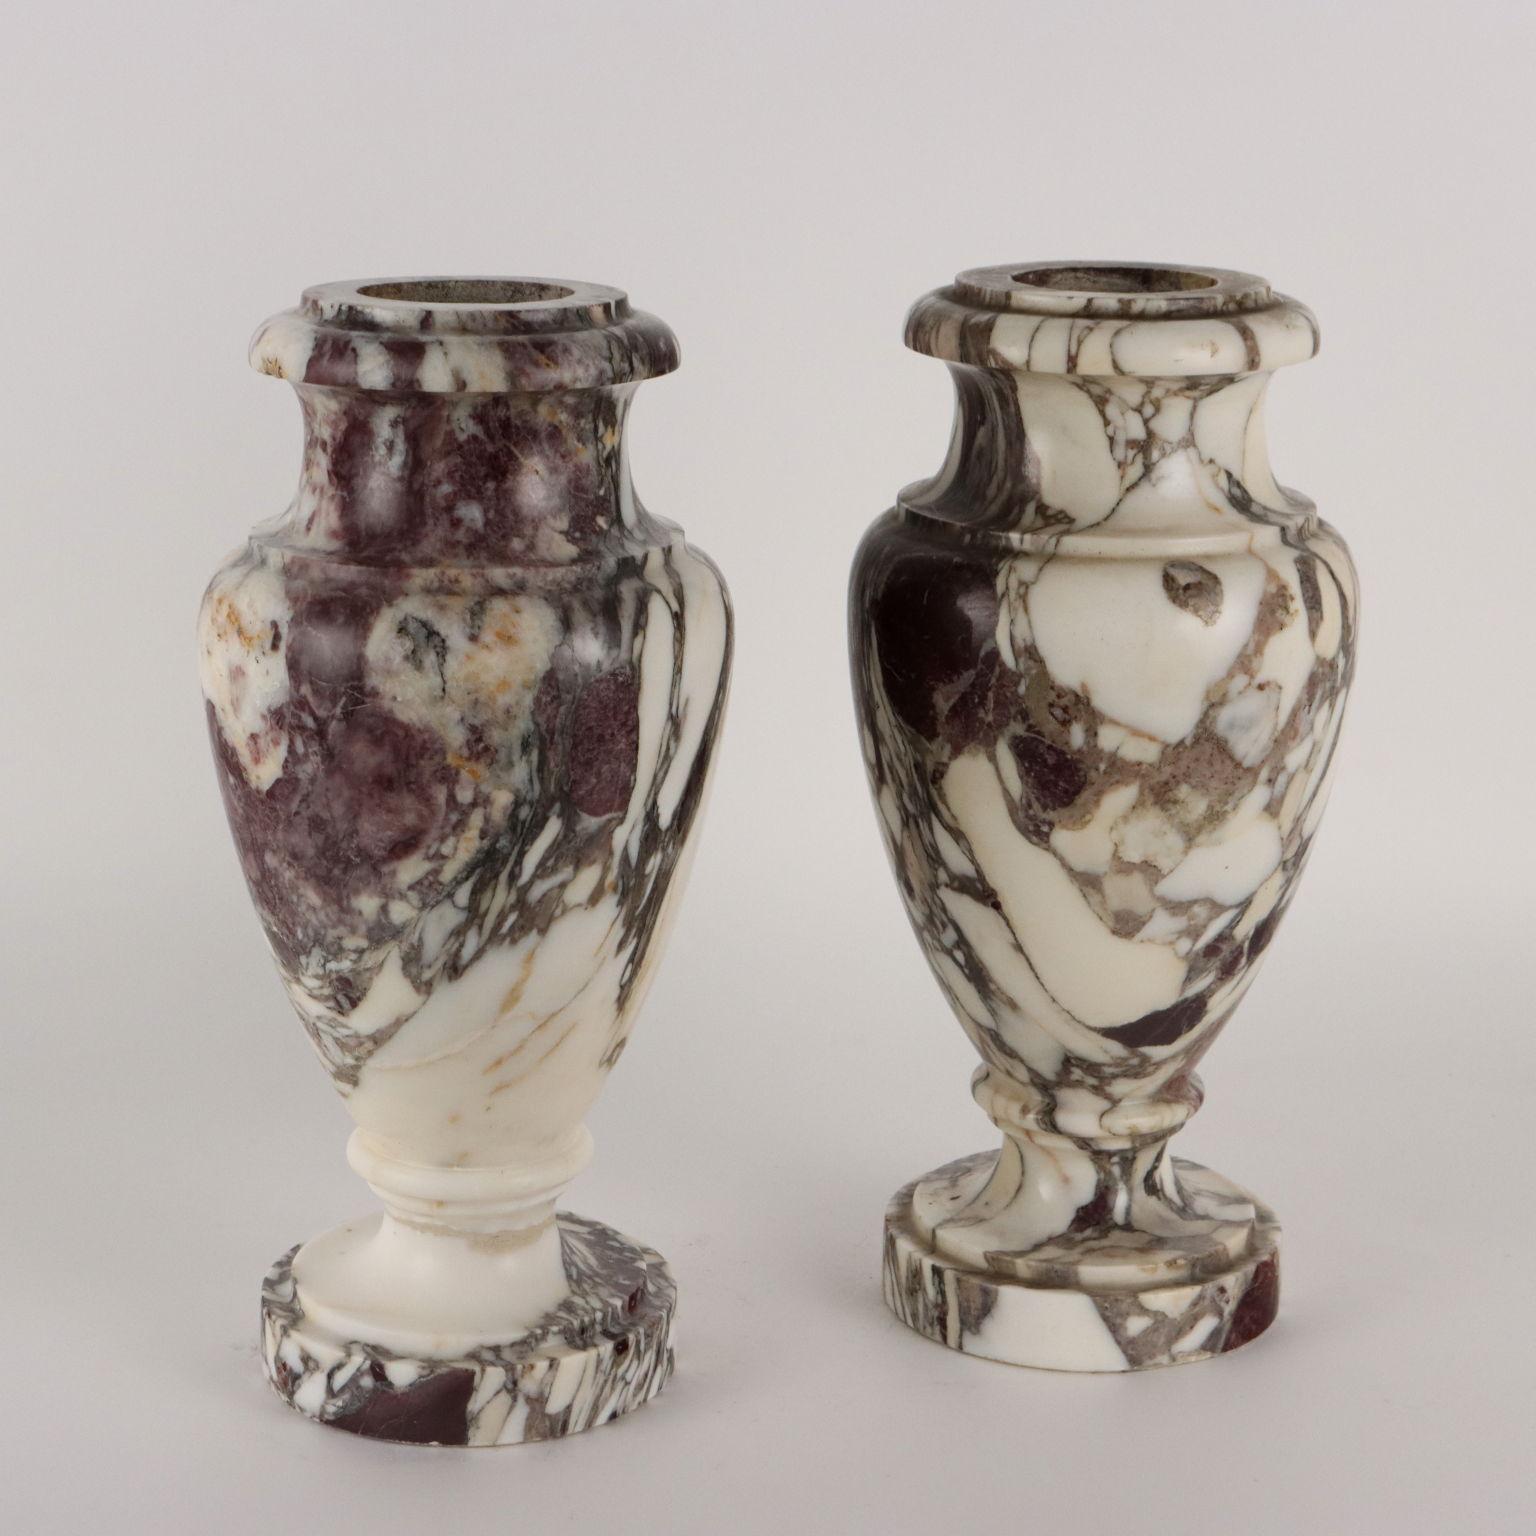 Breccia Marble Pair of Vases Marble Italy XIX-XX Century, Italy, Late '800s - Early '900s